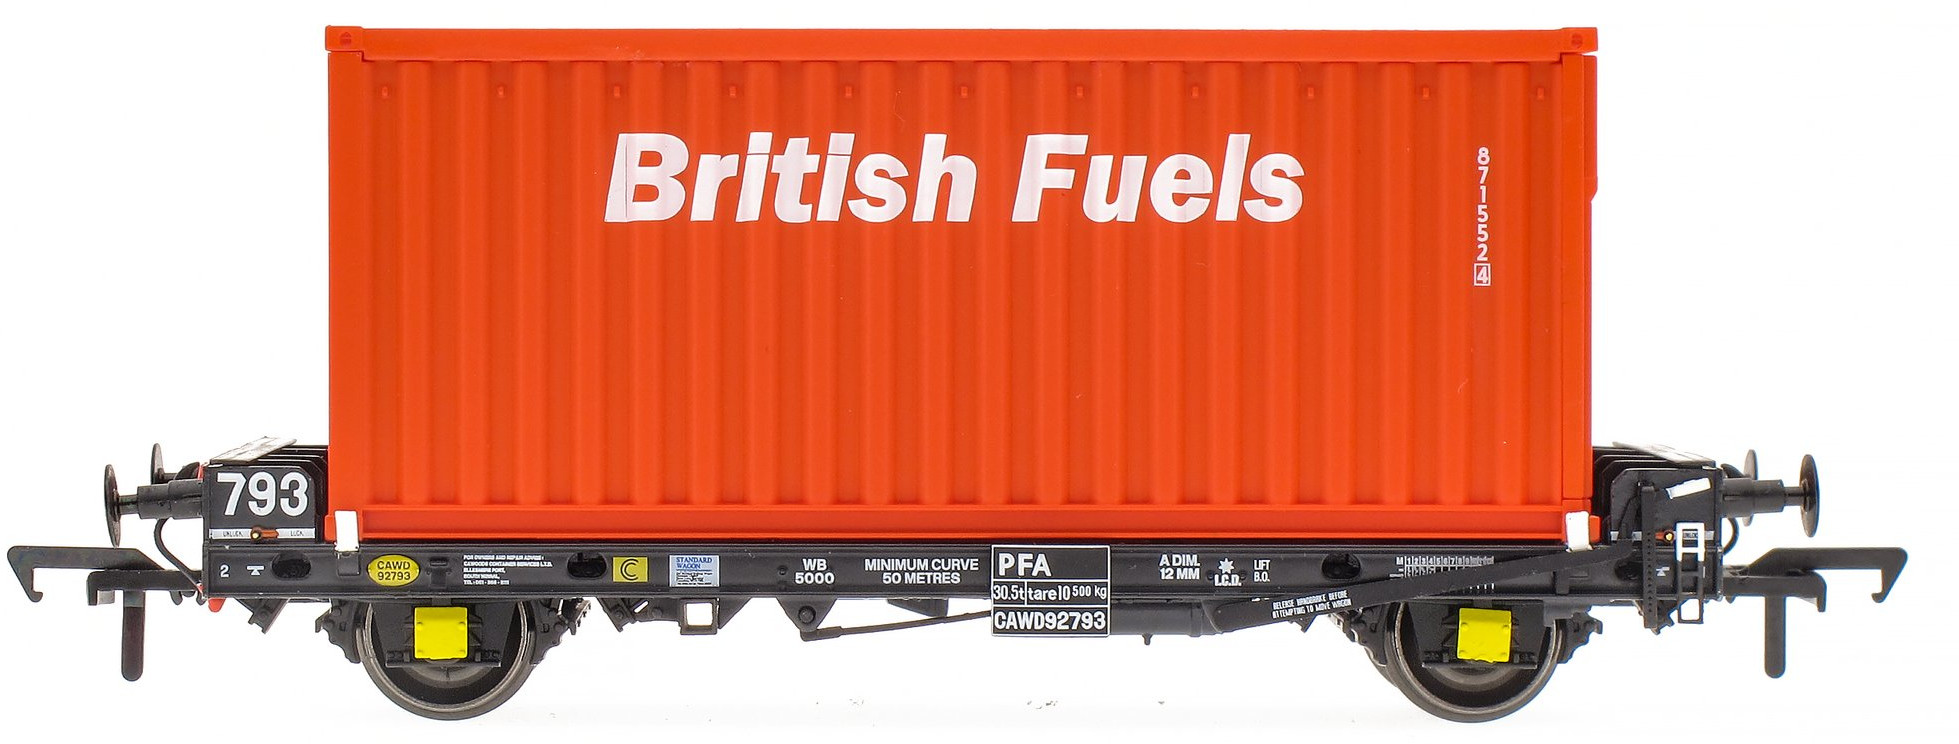 Accurascale PFA-BF-BUNDLE Flat British Fuels BFL92793 Image